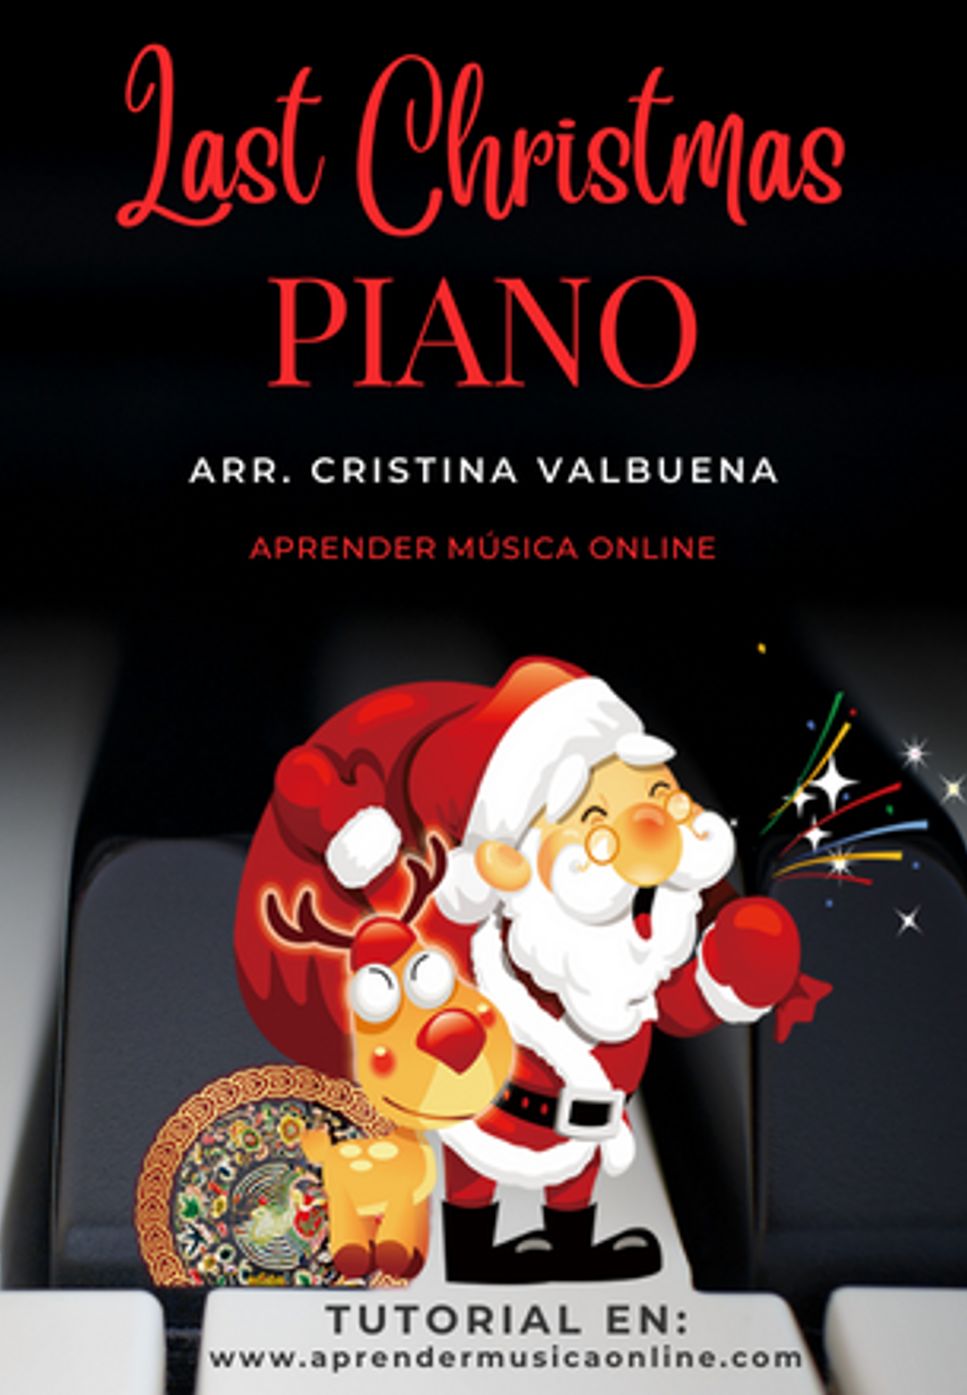 Last Christmas by Cristina Valbuena